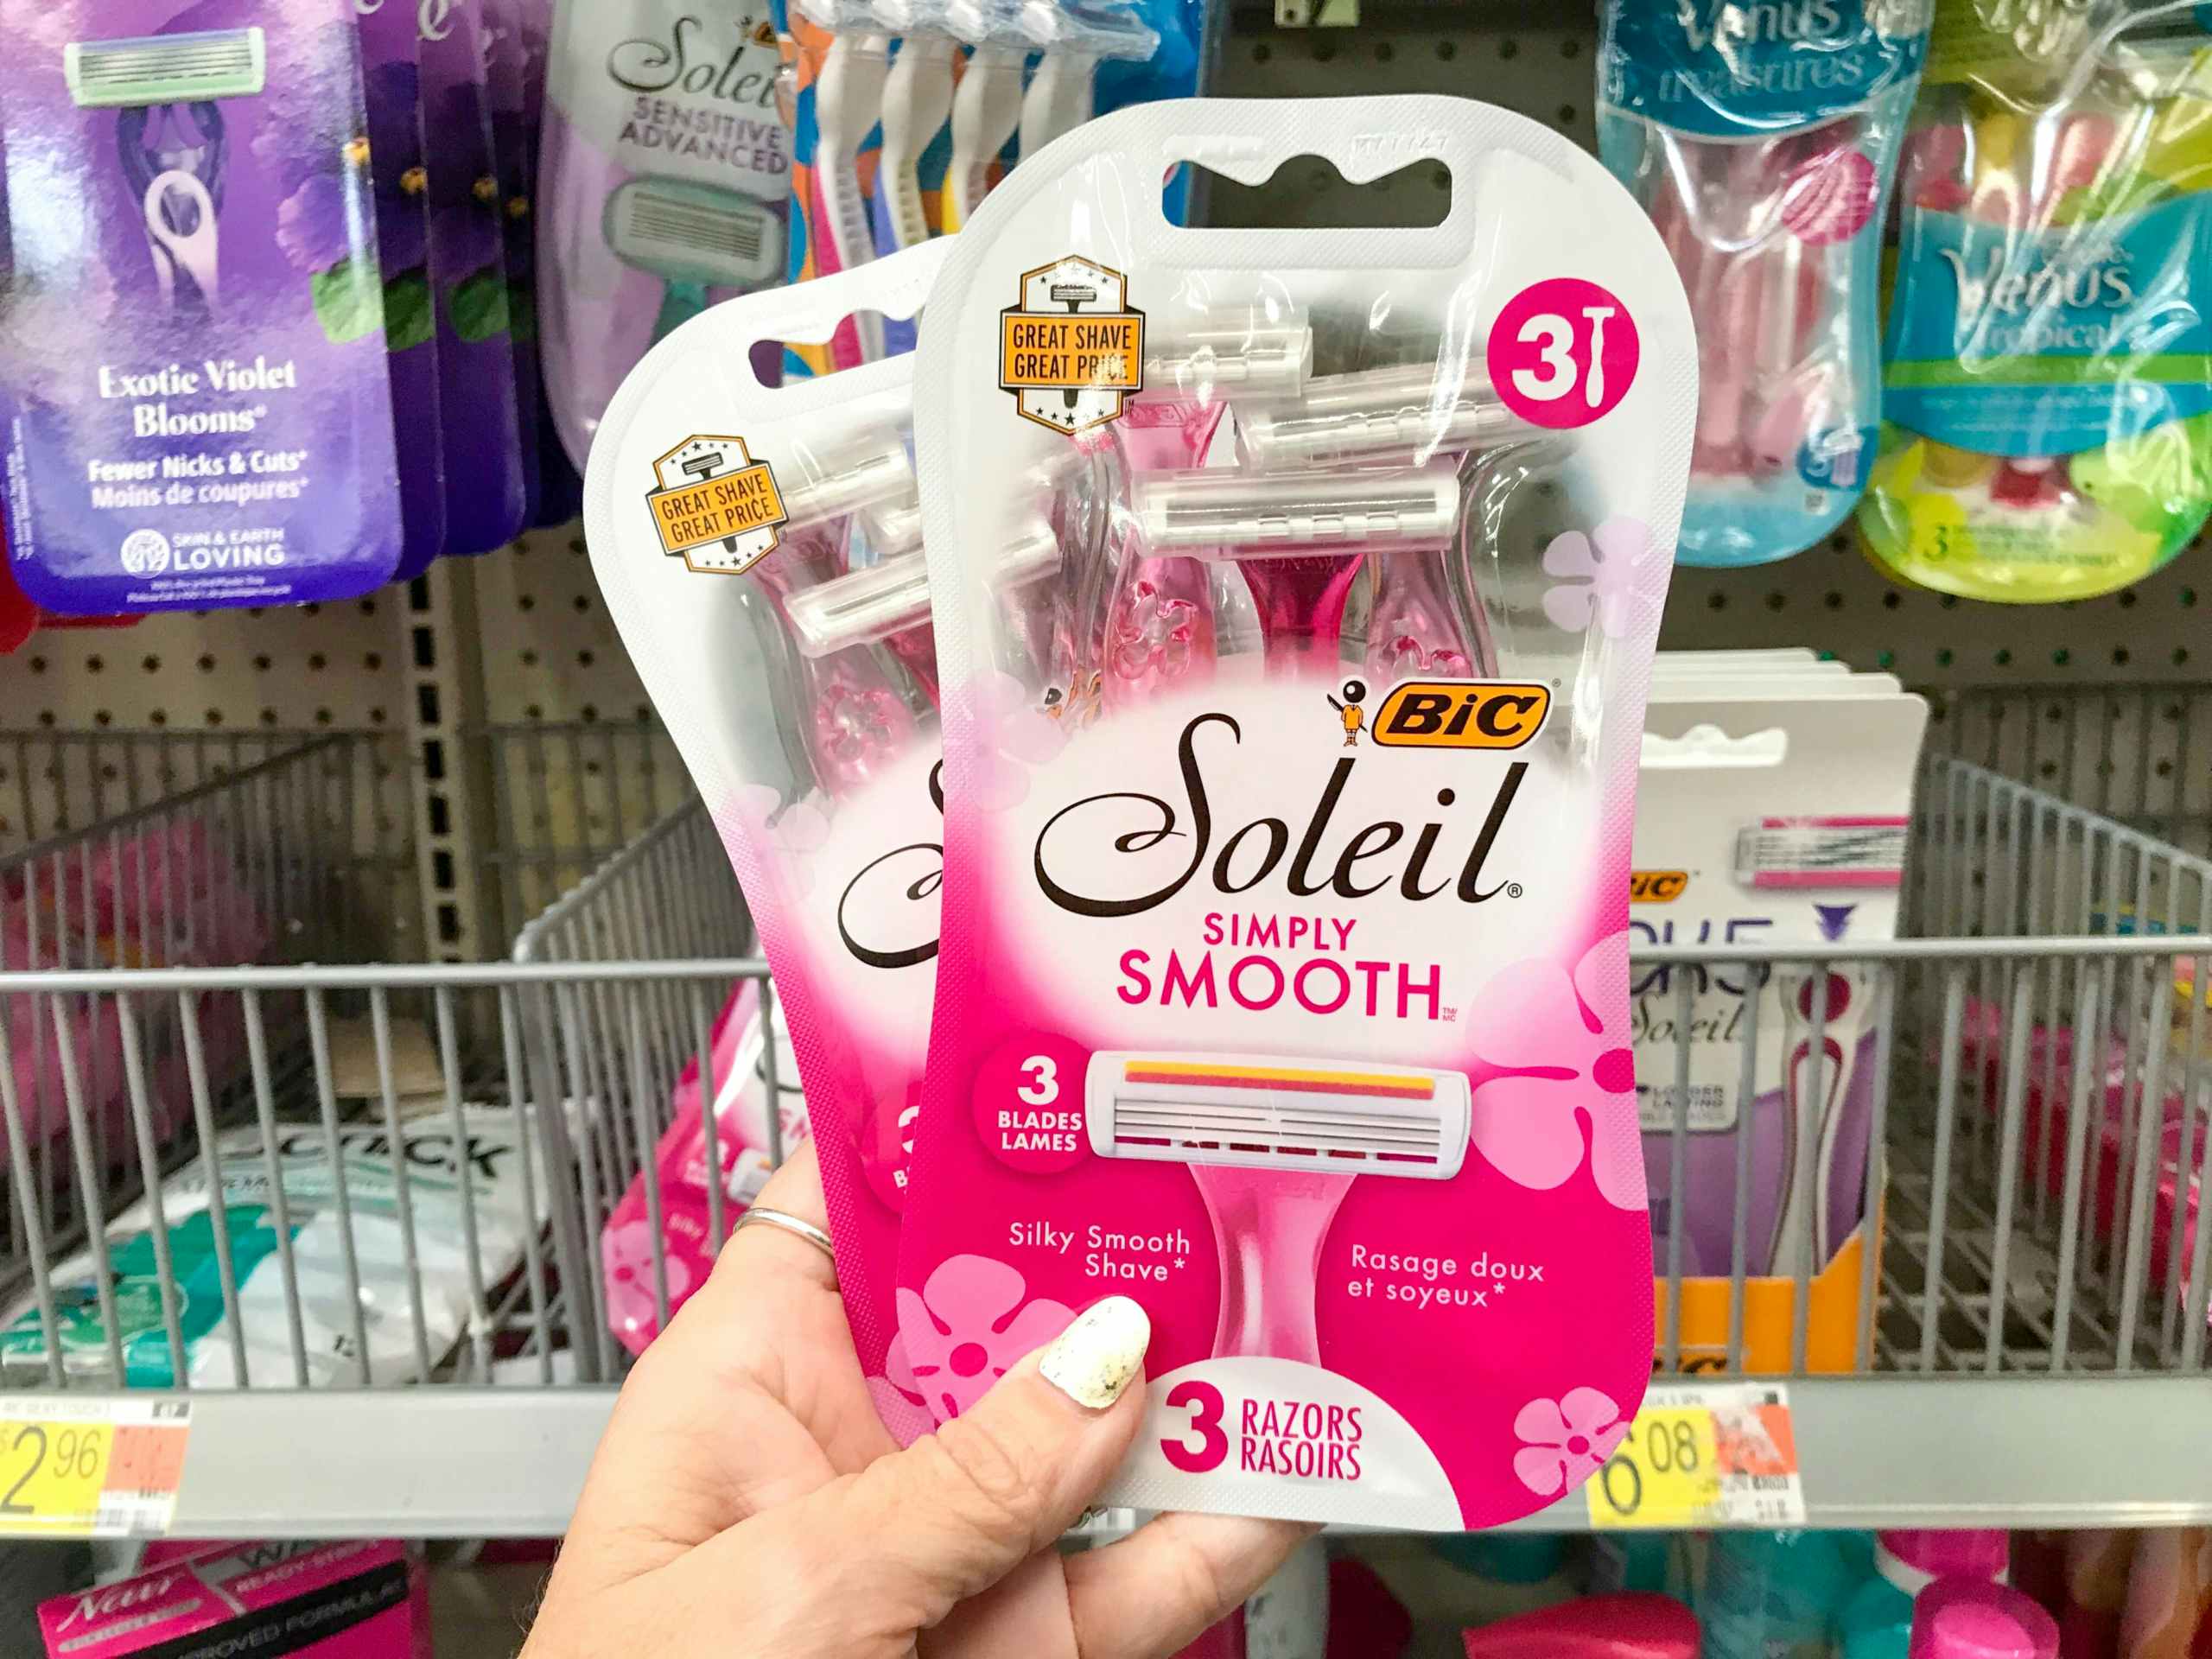 Bic Soleil Simply Smooth Razors at Walmart